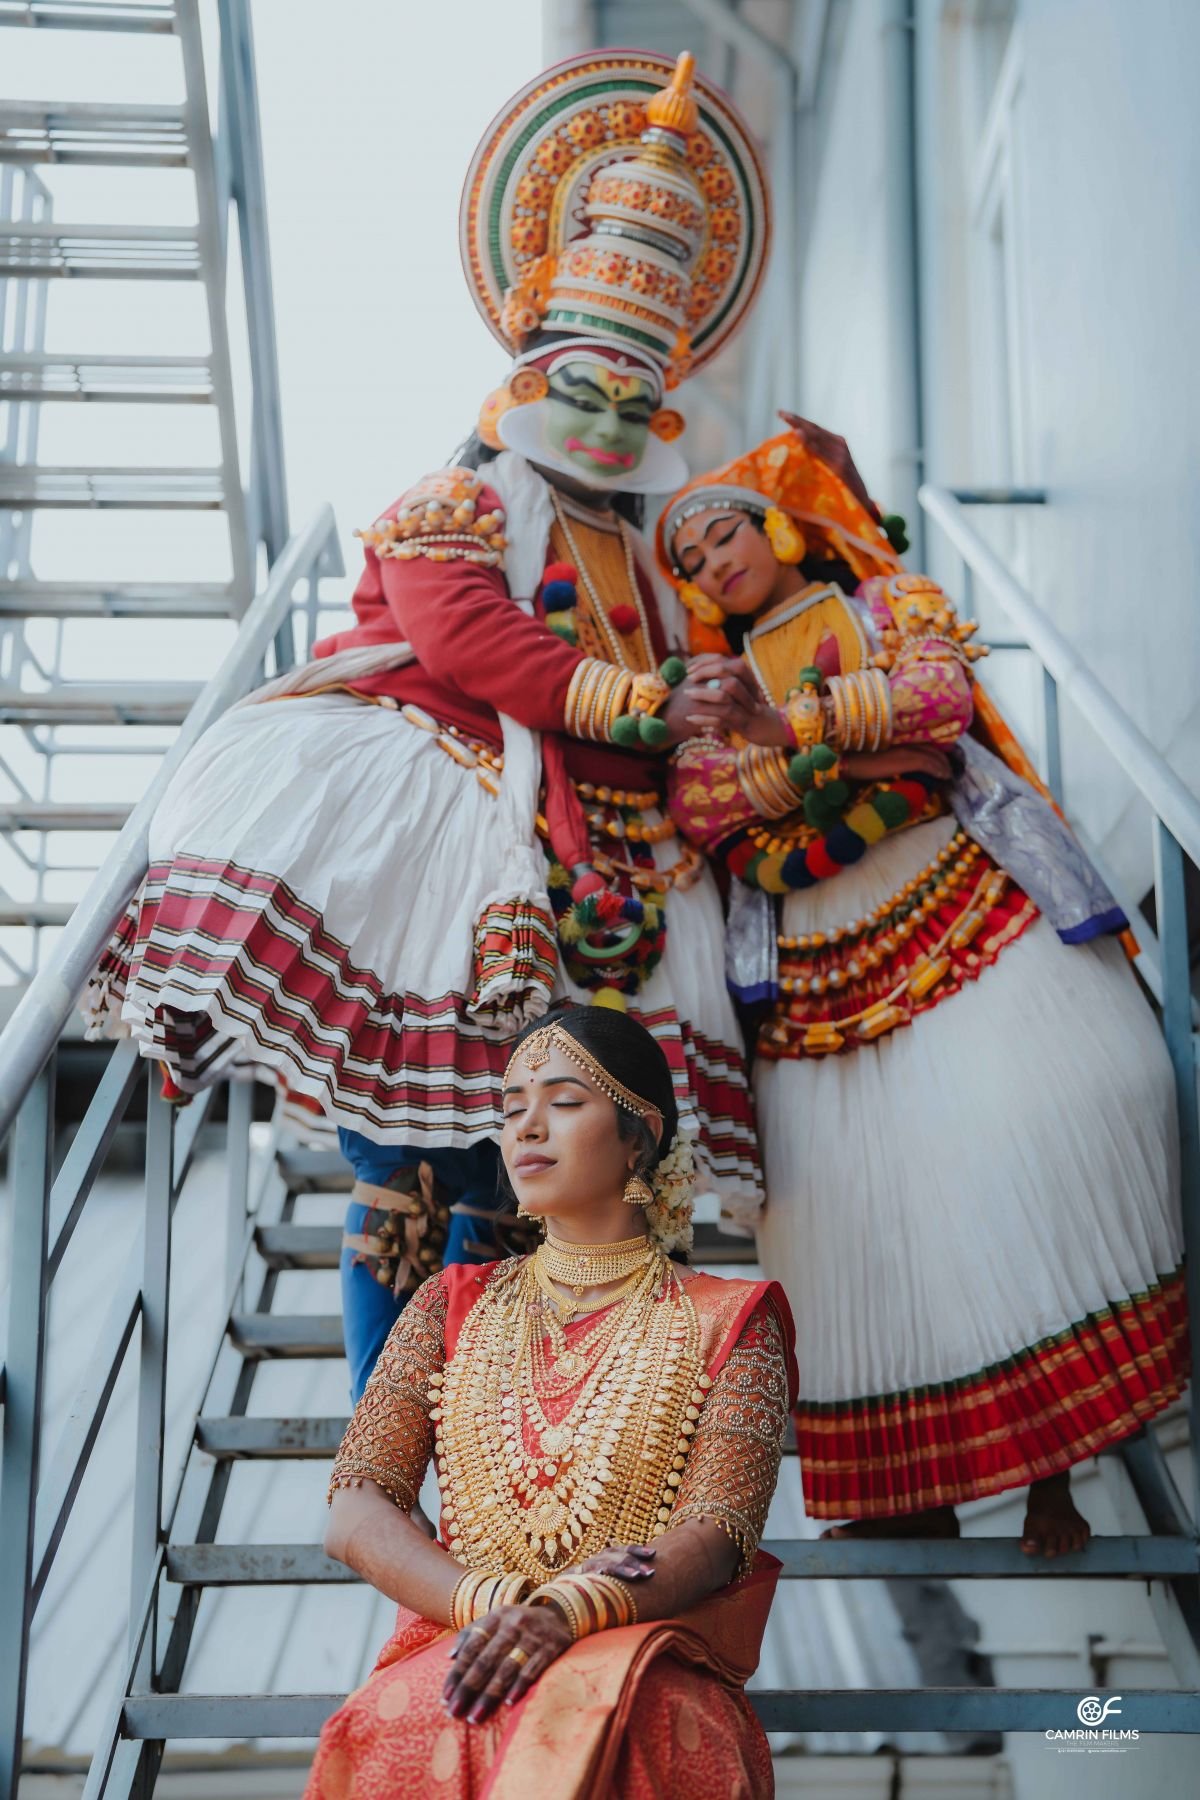 Discover The Magic Of A Sacred Hindu Matrimonial Celebration.